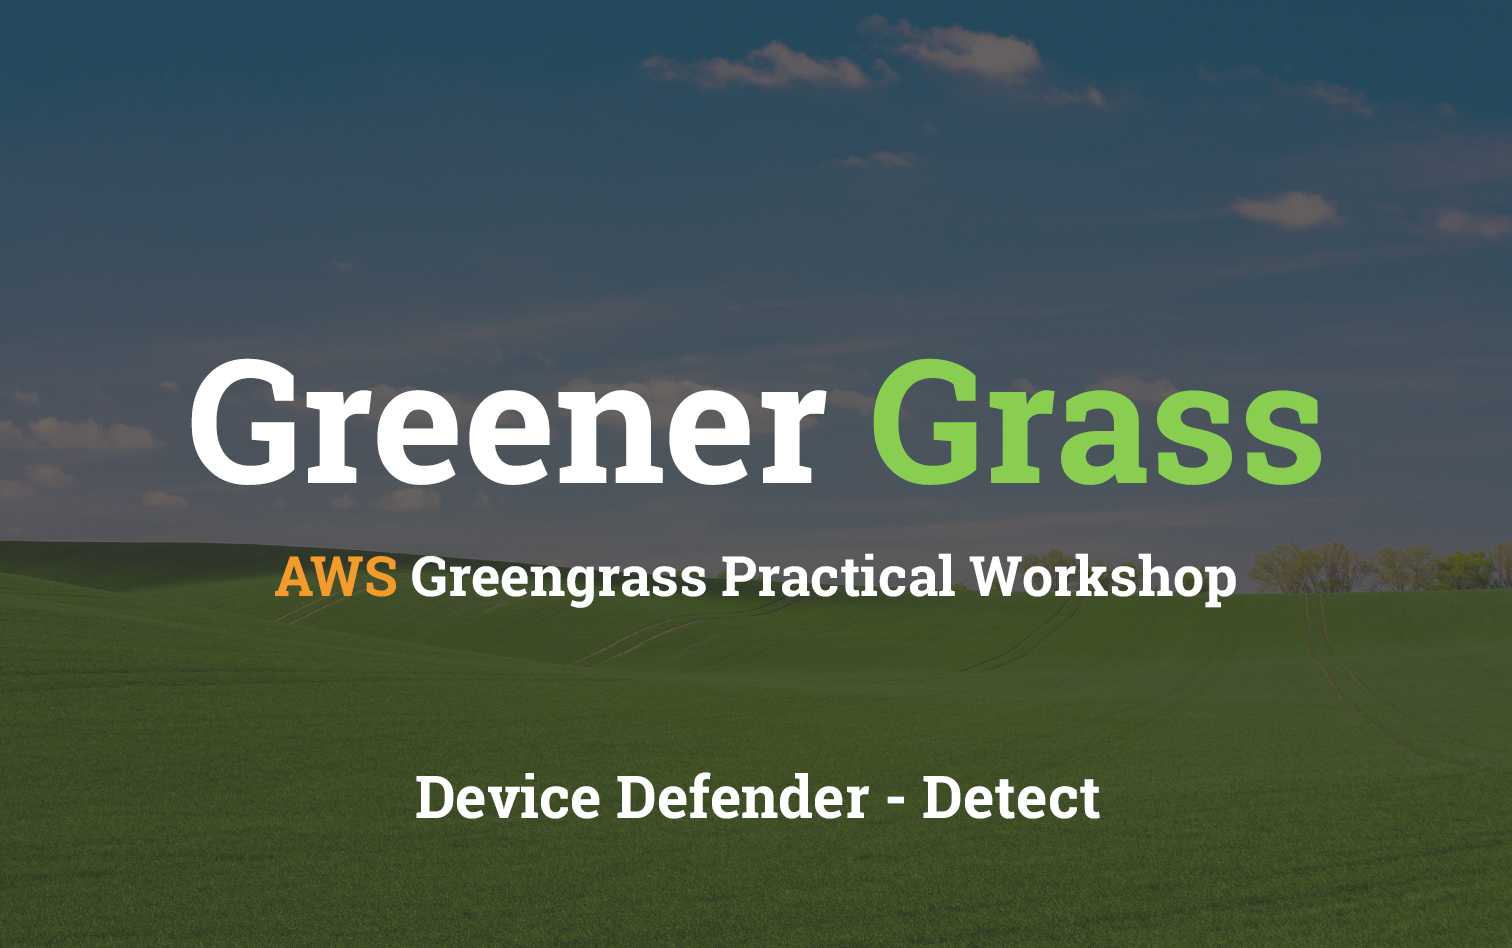 Greengrass - Device Defender - Detect